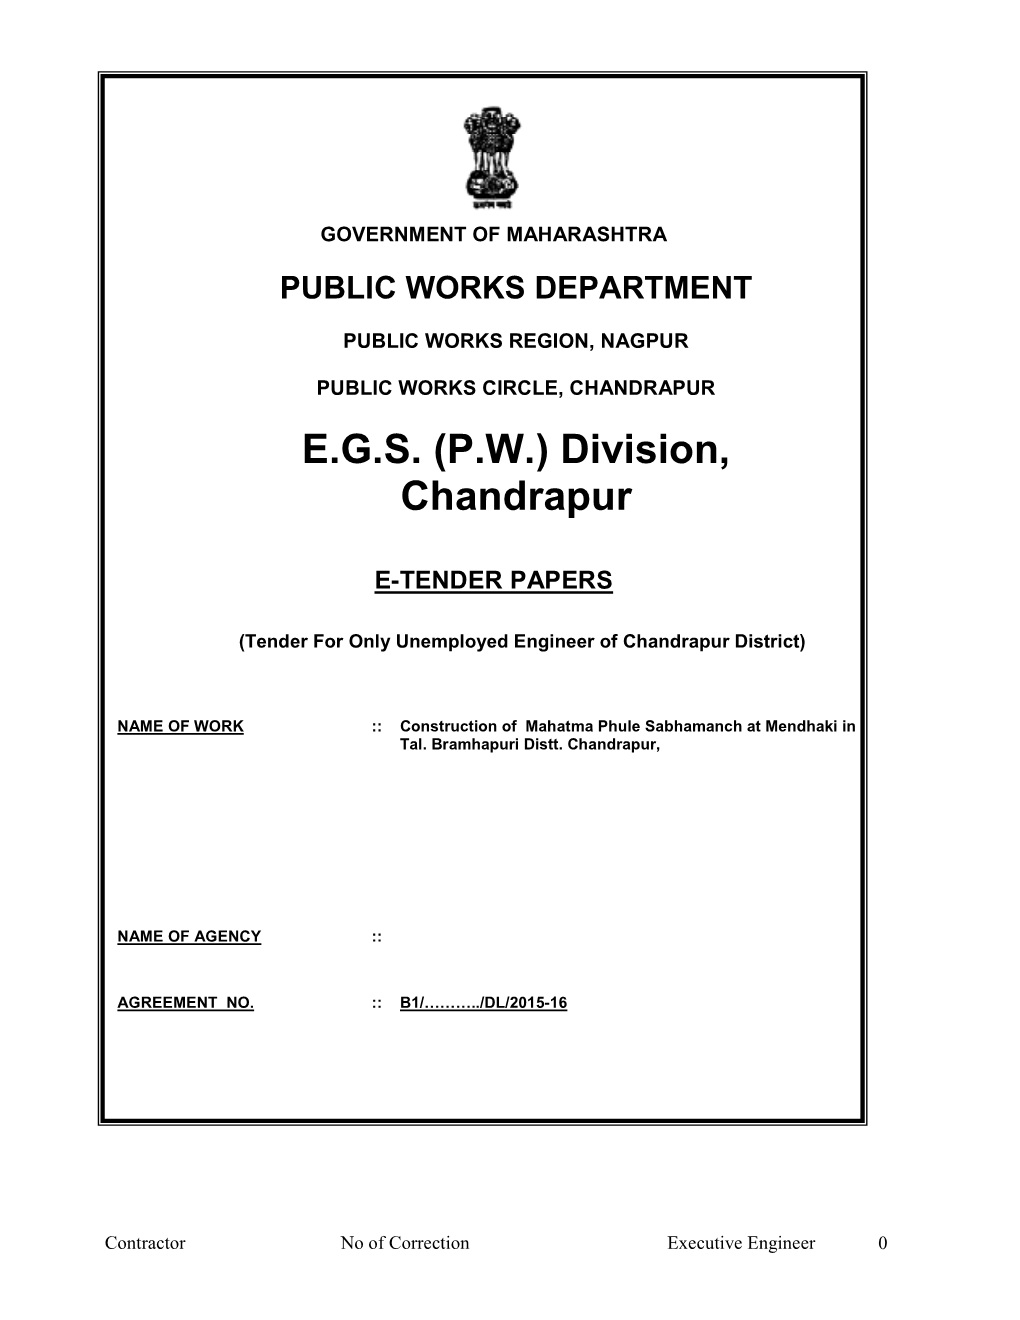 E.G.S. (P.W.) Division, Chandrapur